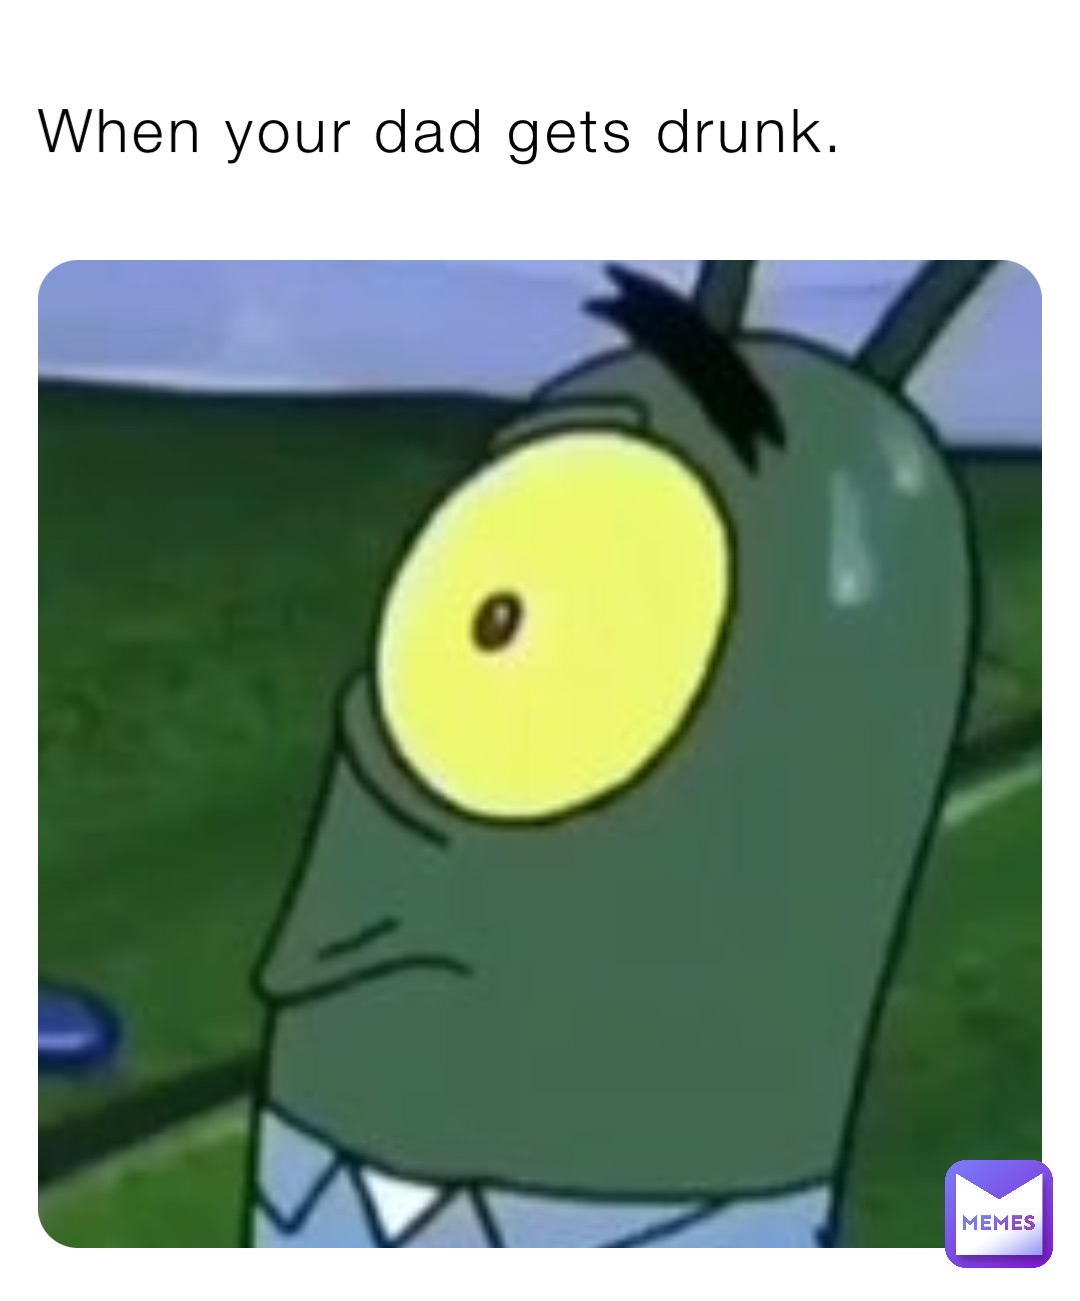 When your dad gets drunk.